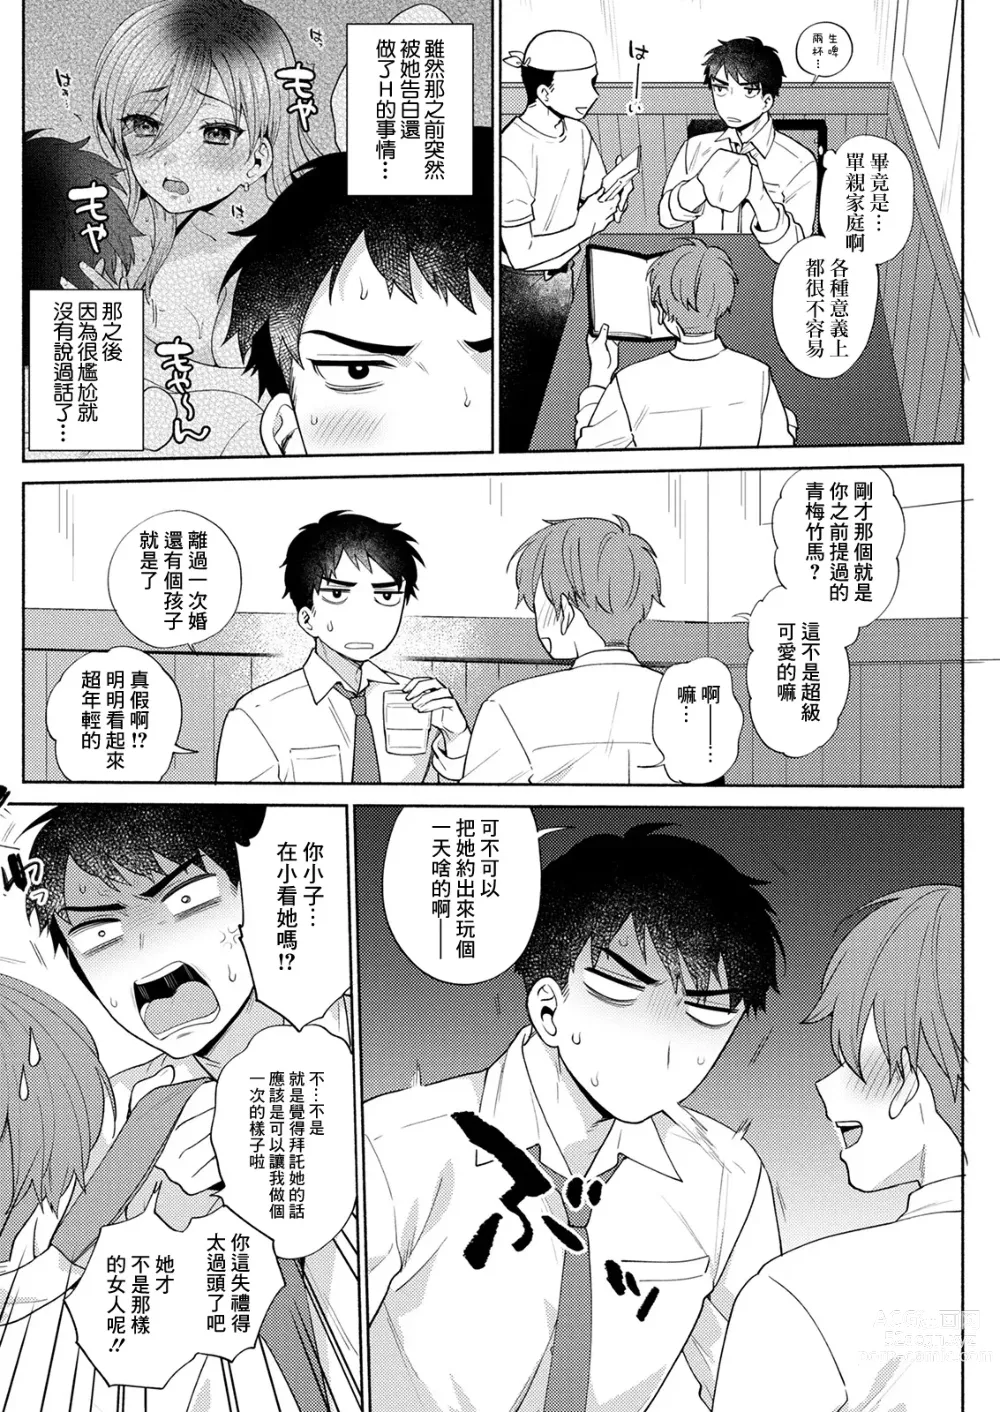 Page 2 of manga Overskip